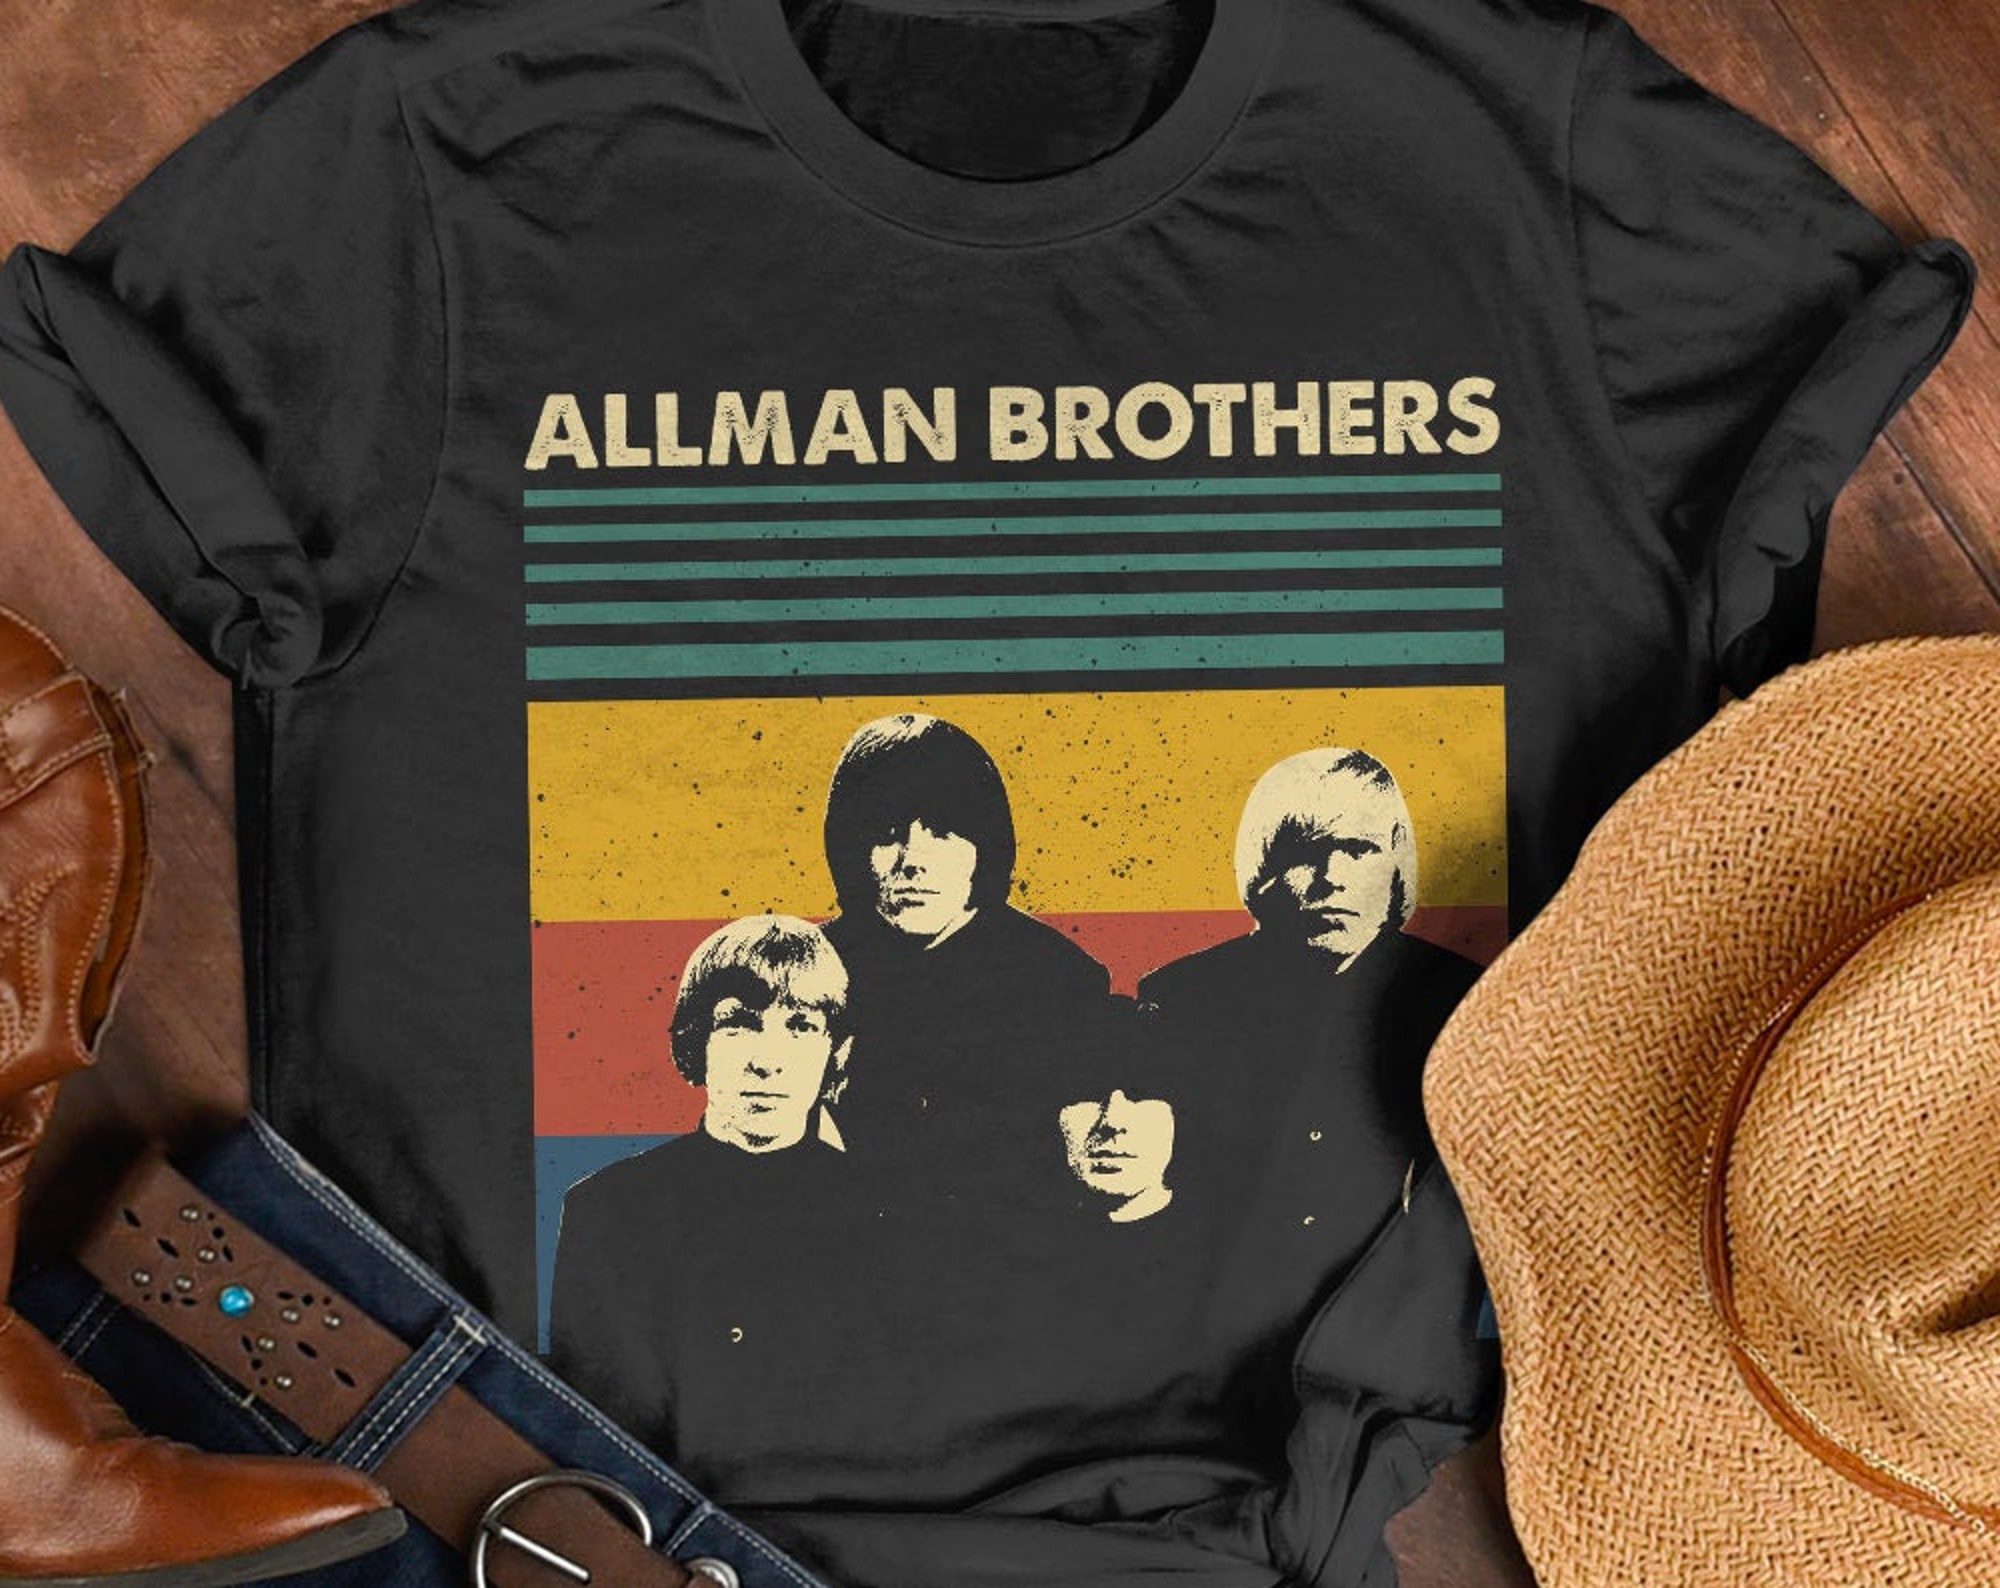 Allman Brothers Retro Vintage T-Shirt, Allman Brothers Vintage Shirt Idea